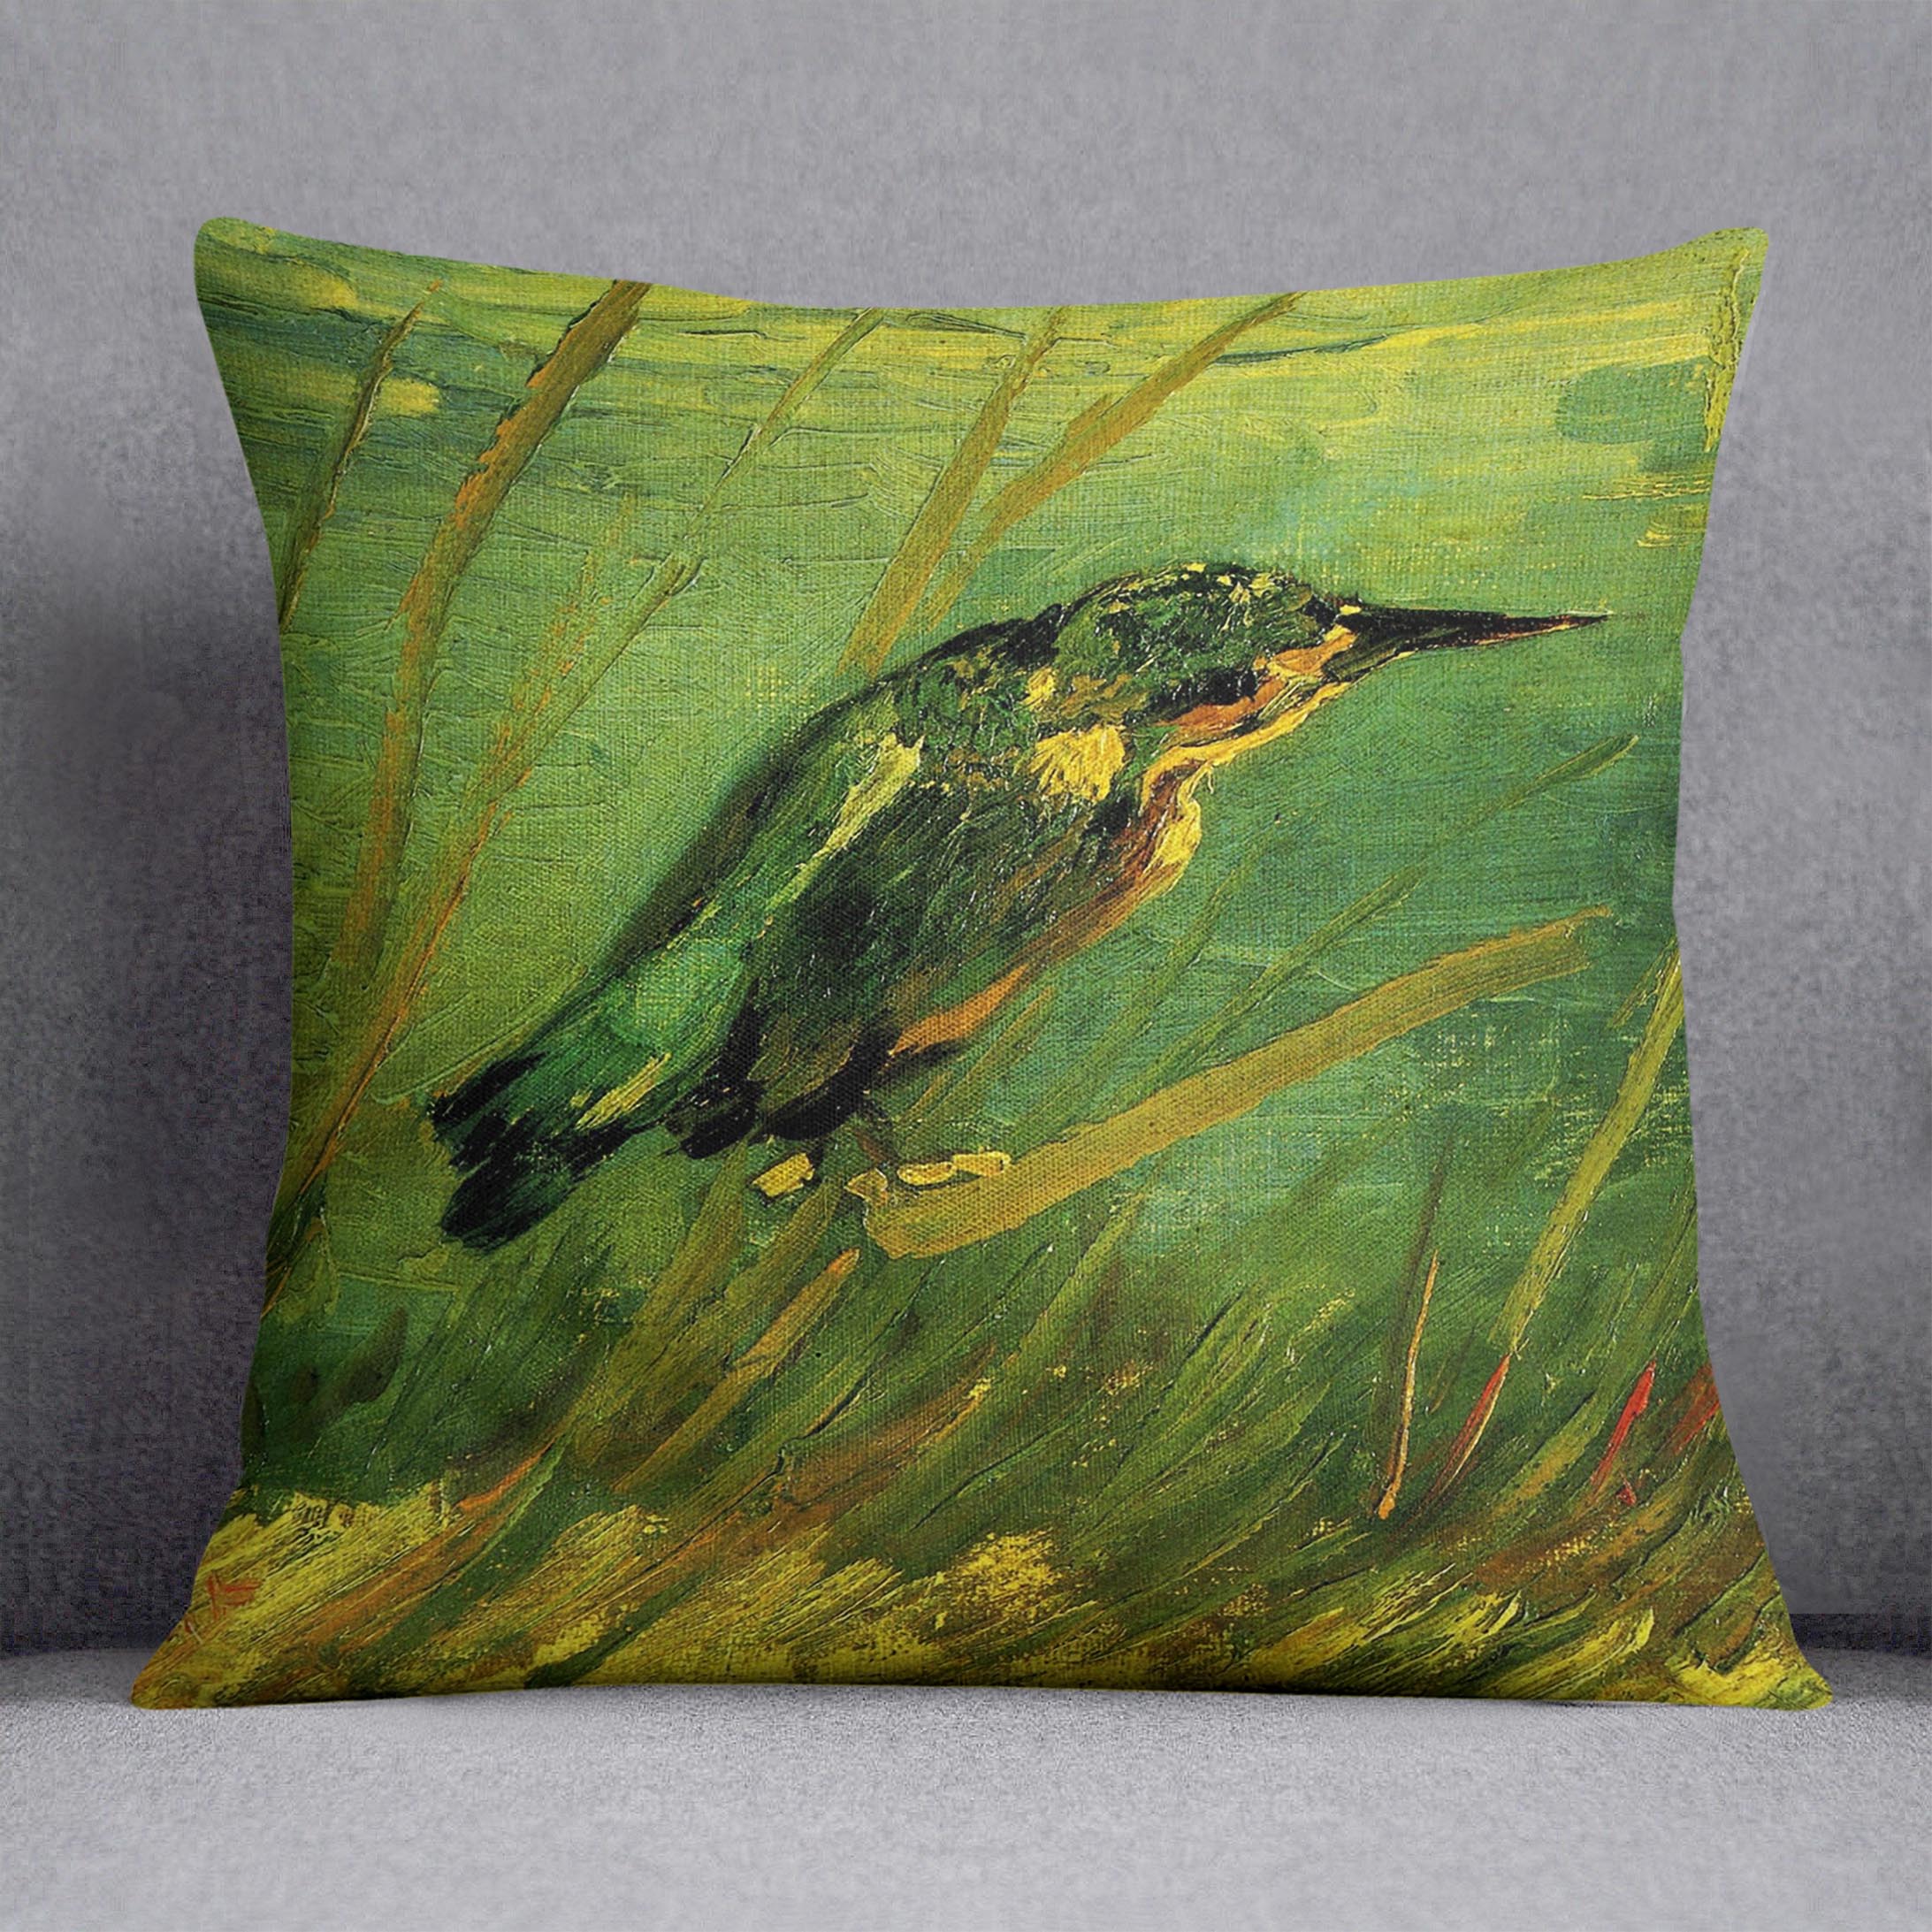 The Kingfisher by Van Gogh Cushion